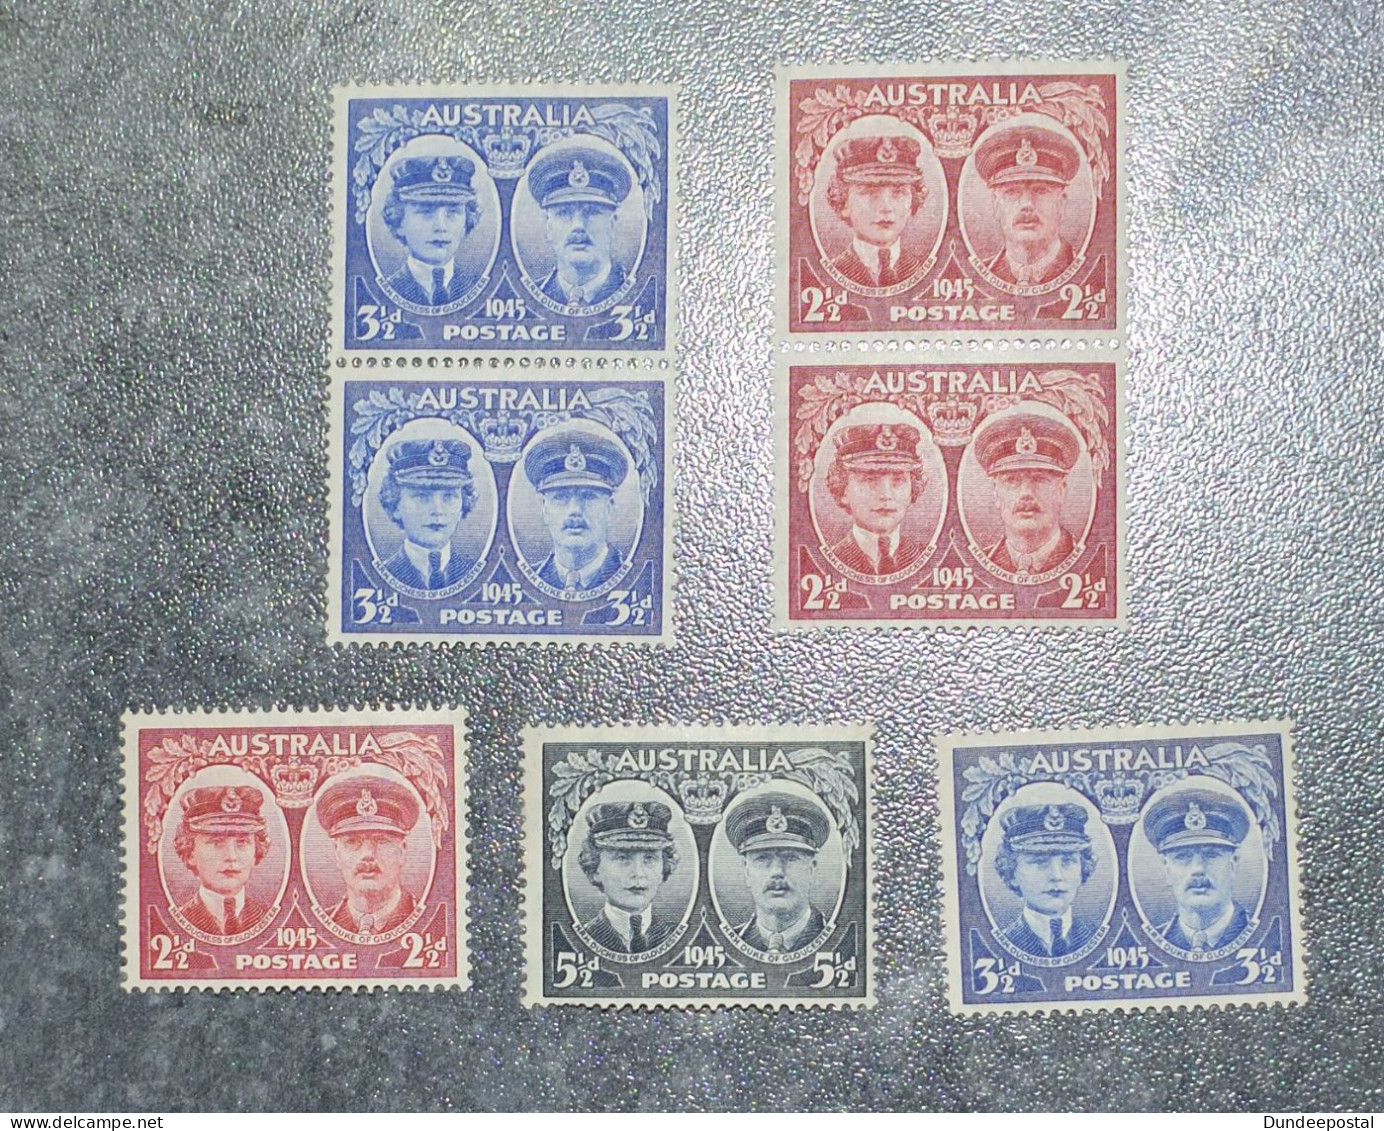 AUSTRALIA  Stamps Comms. MNH + Small Mount  SG209 210 211 1945   (R3) ~~L@@K~~ - Ongebruikt